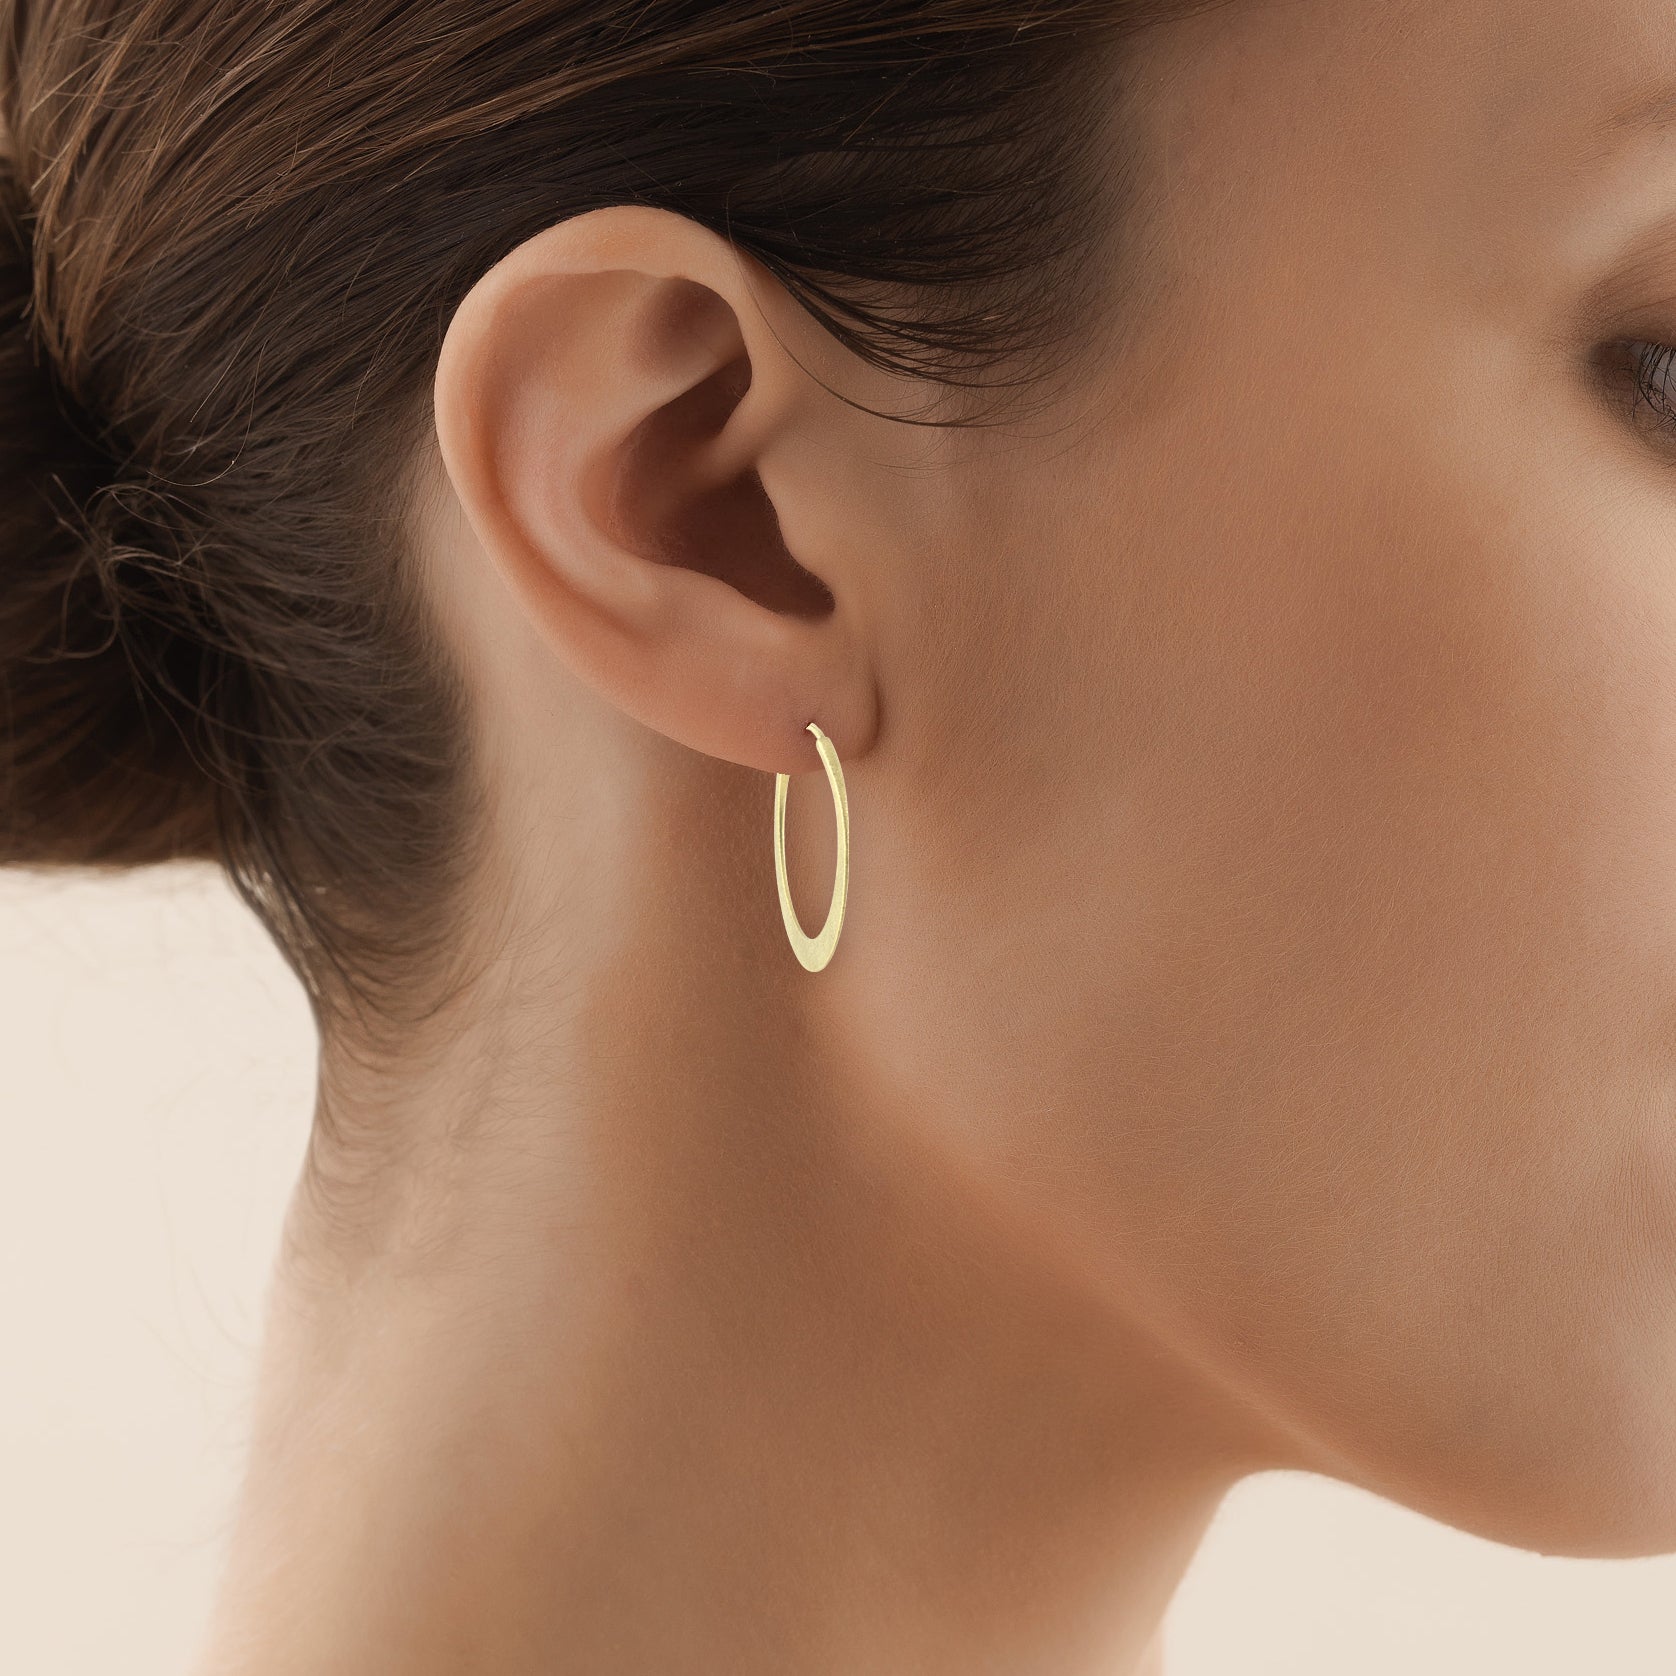 Buy Gold Hammered Hoop Earrings 1 Inch Gold Dangle Earrings Online in India   Etsy